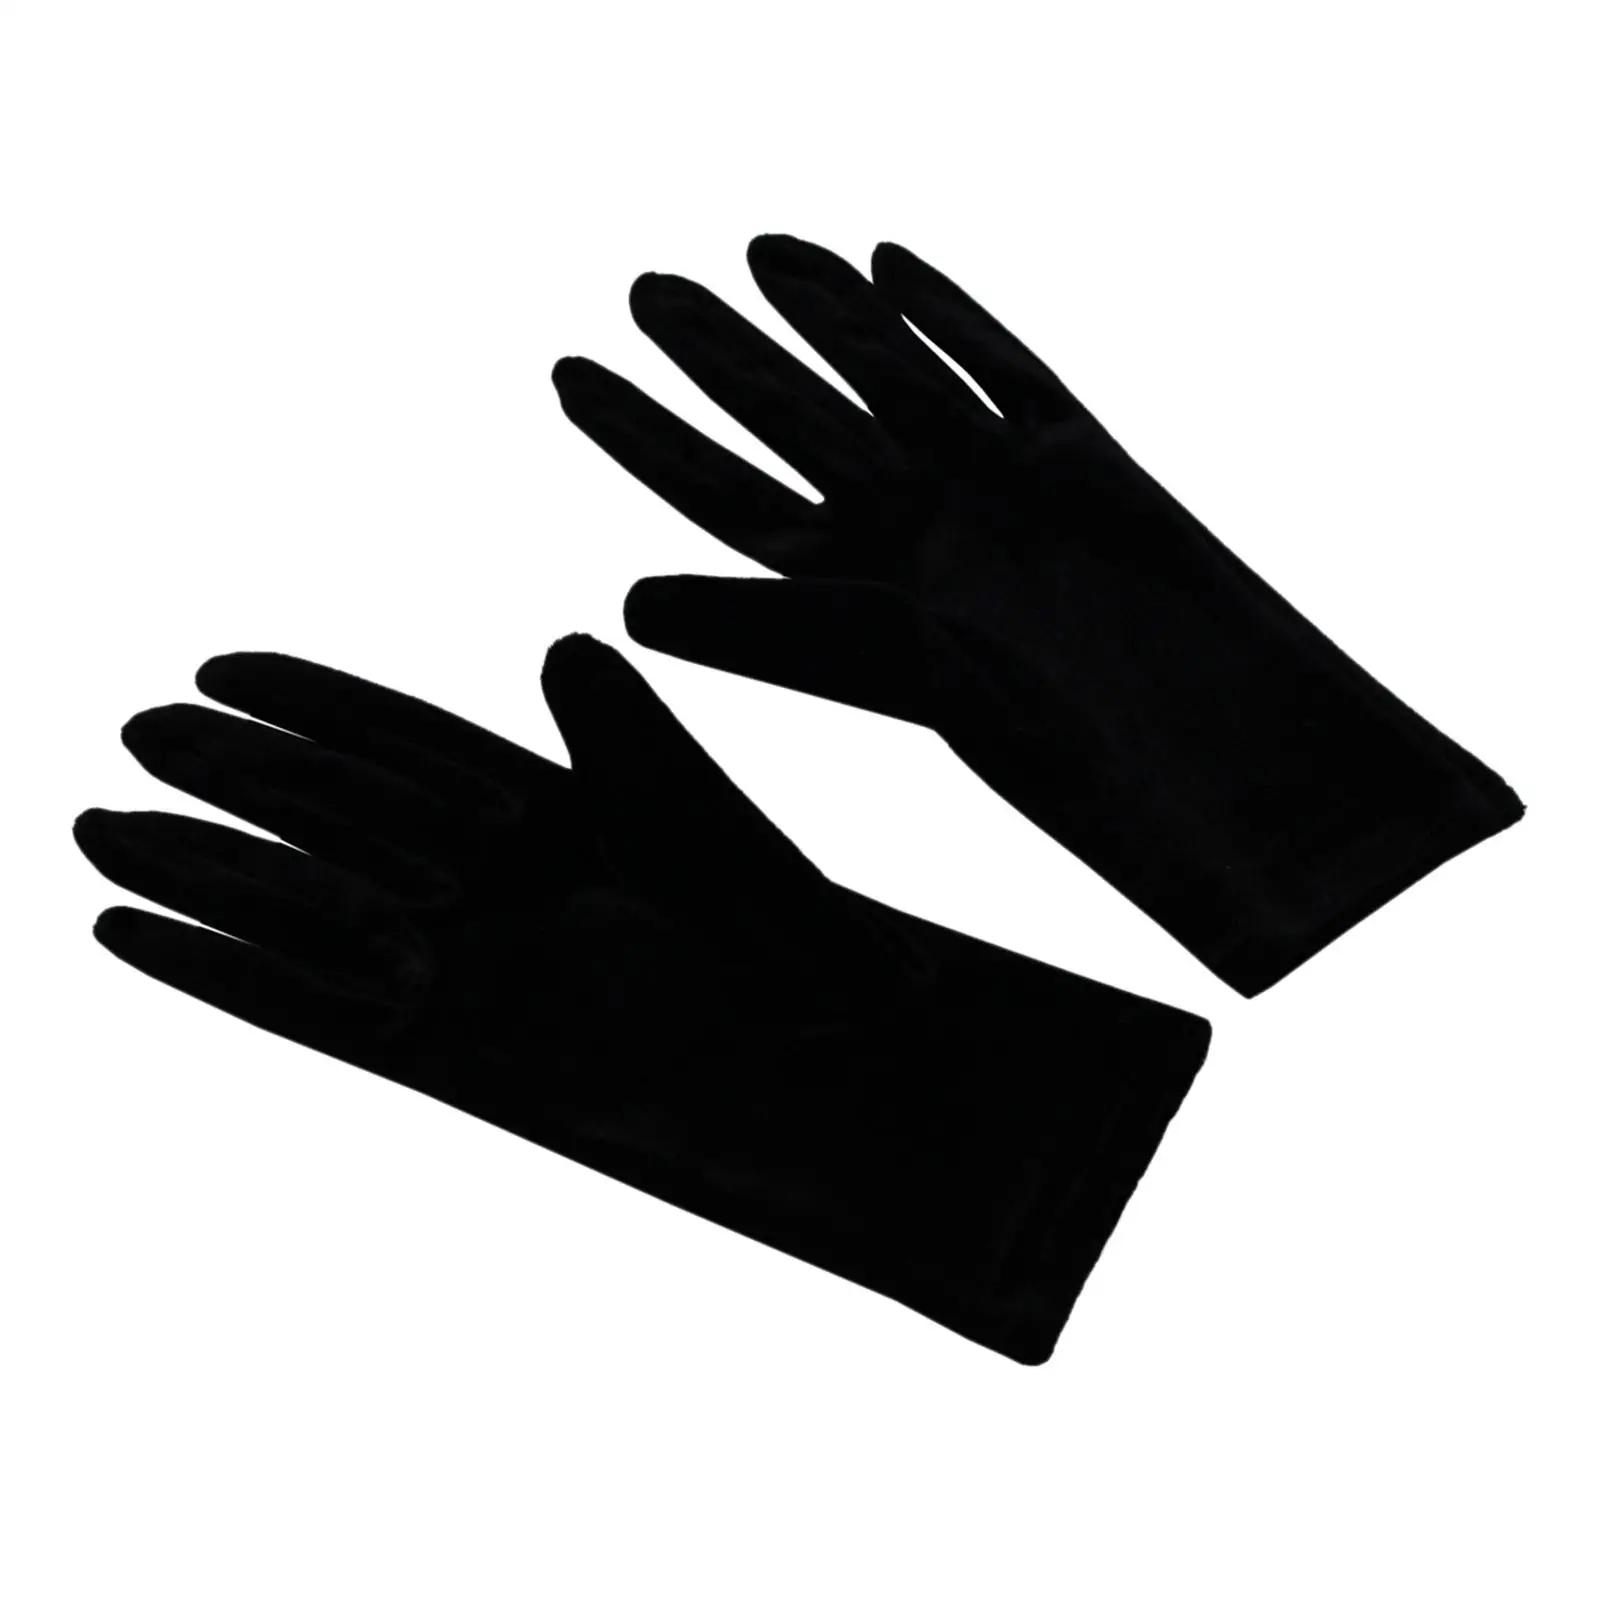 Fashion Short Velvet Gloves Bride Gloves Full Finger Dancing Gloves for Evening Banquet Dress Tea Party Wedding Accessories